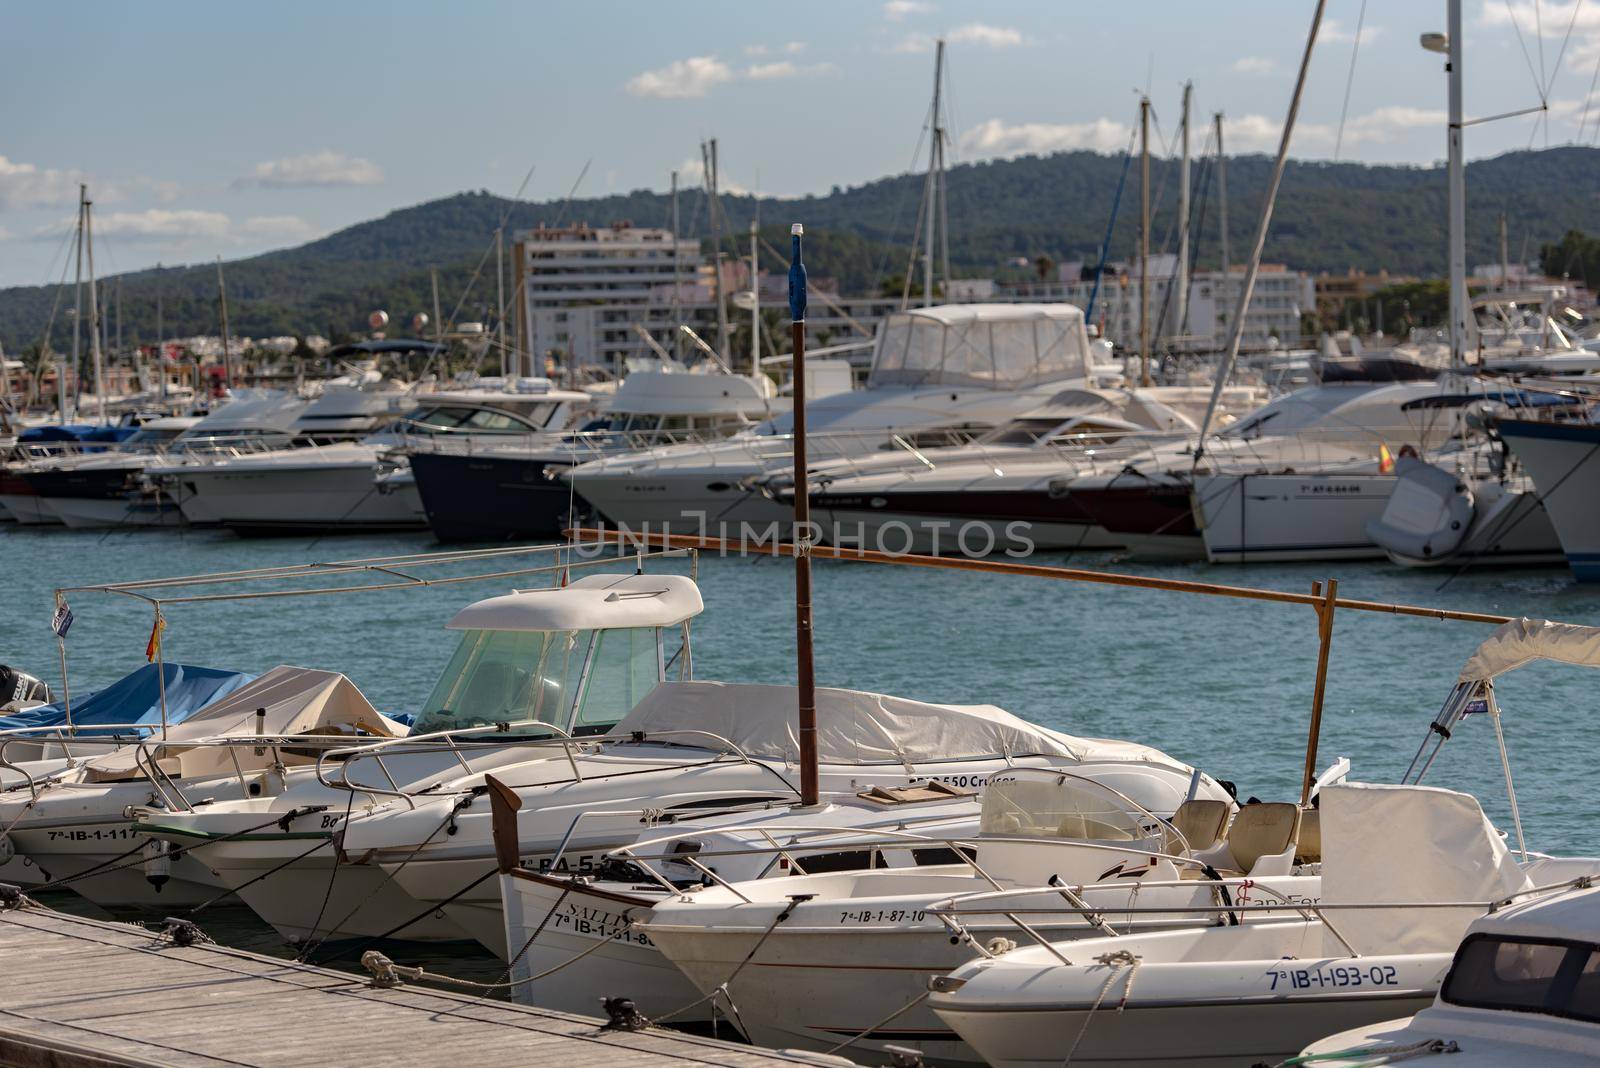 Sant Antoni de Portmany, Ibiza, Spain : NOV 8 2019 : Sunny day in the port of Sant Antoni de POrtmany, Ibiza, Spain.